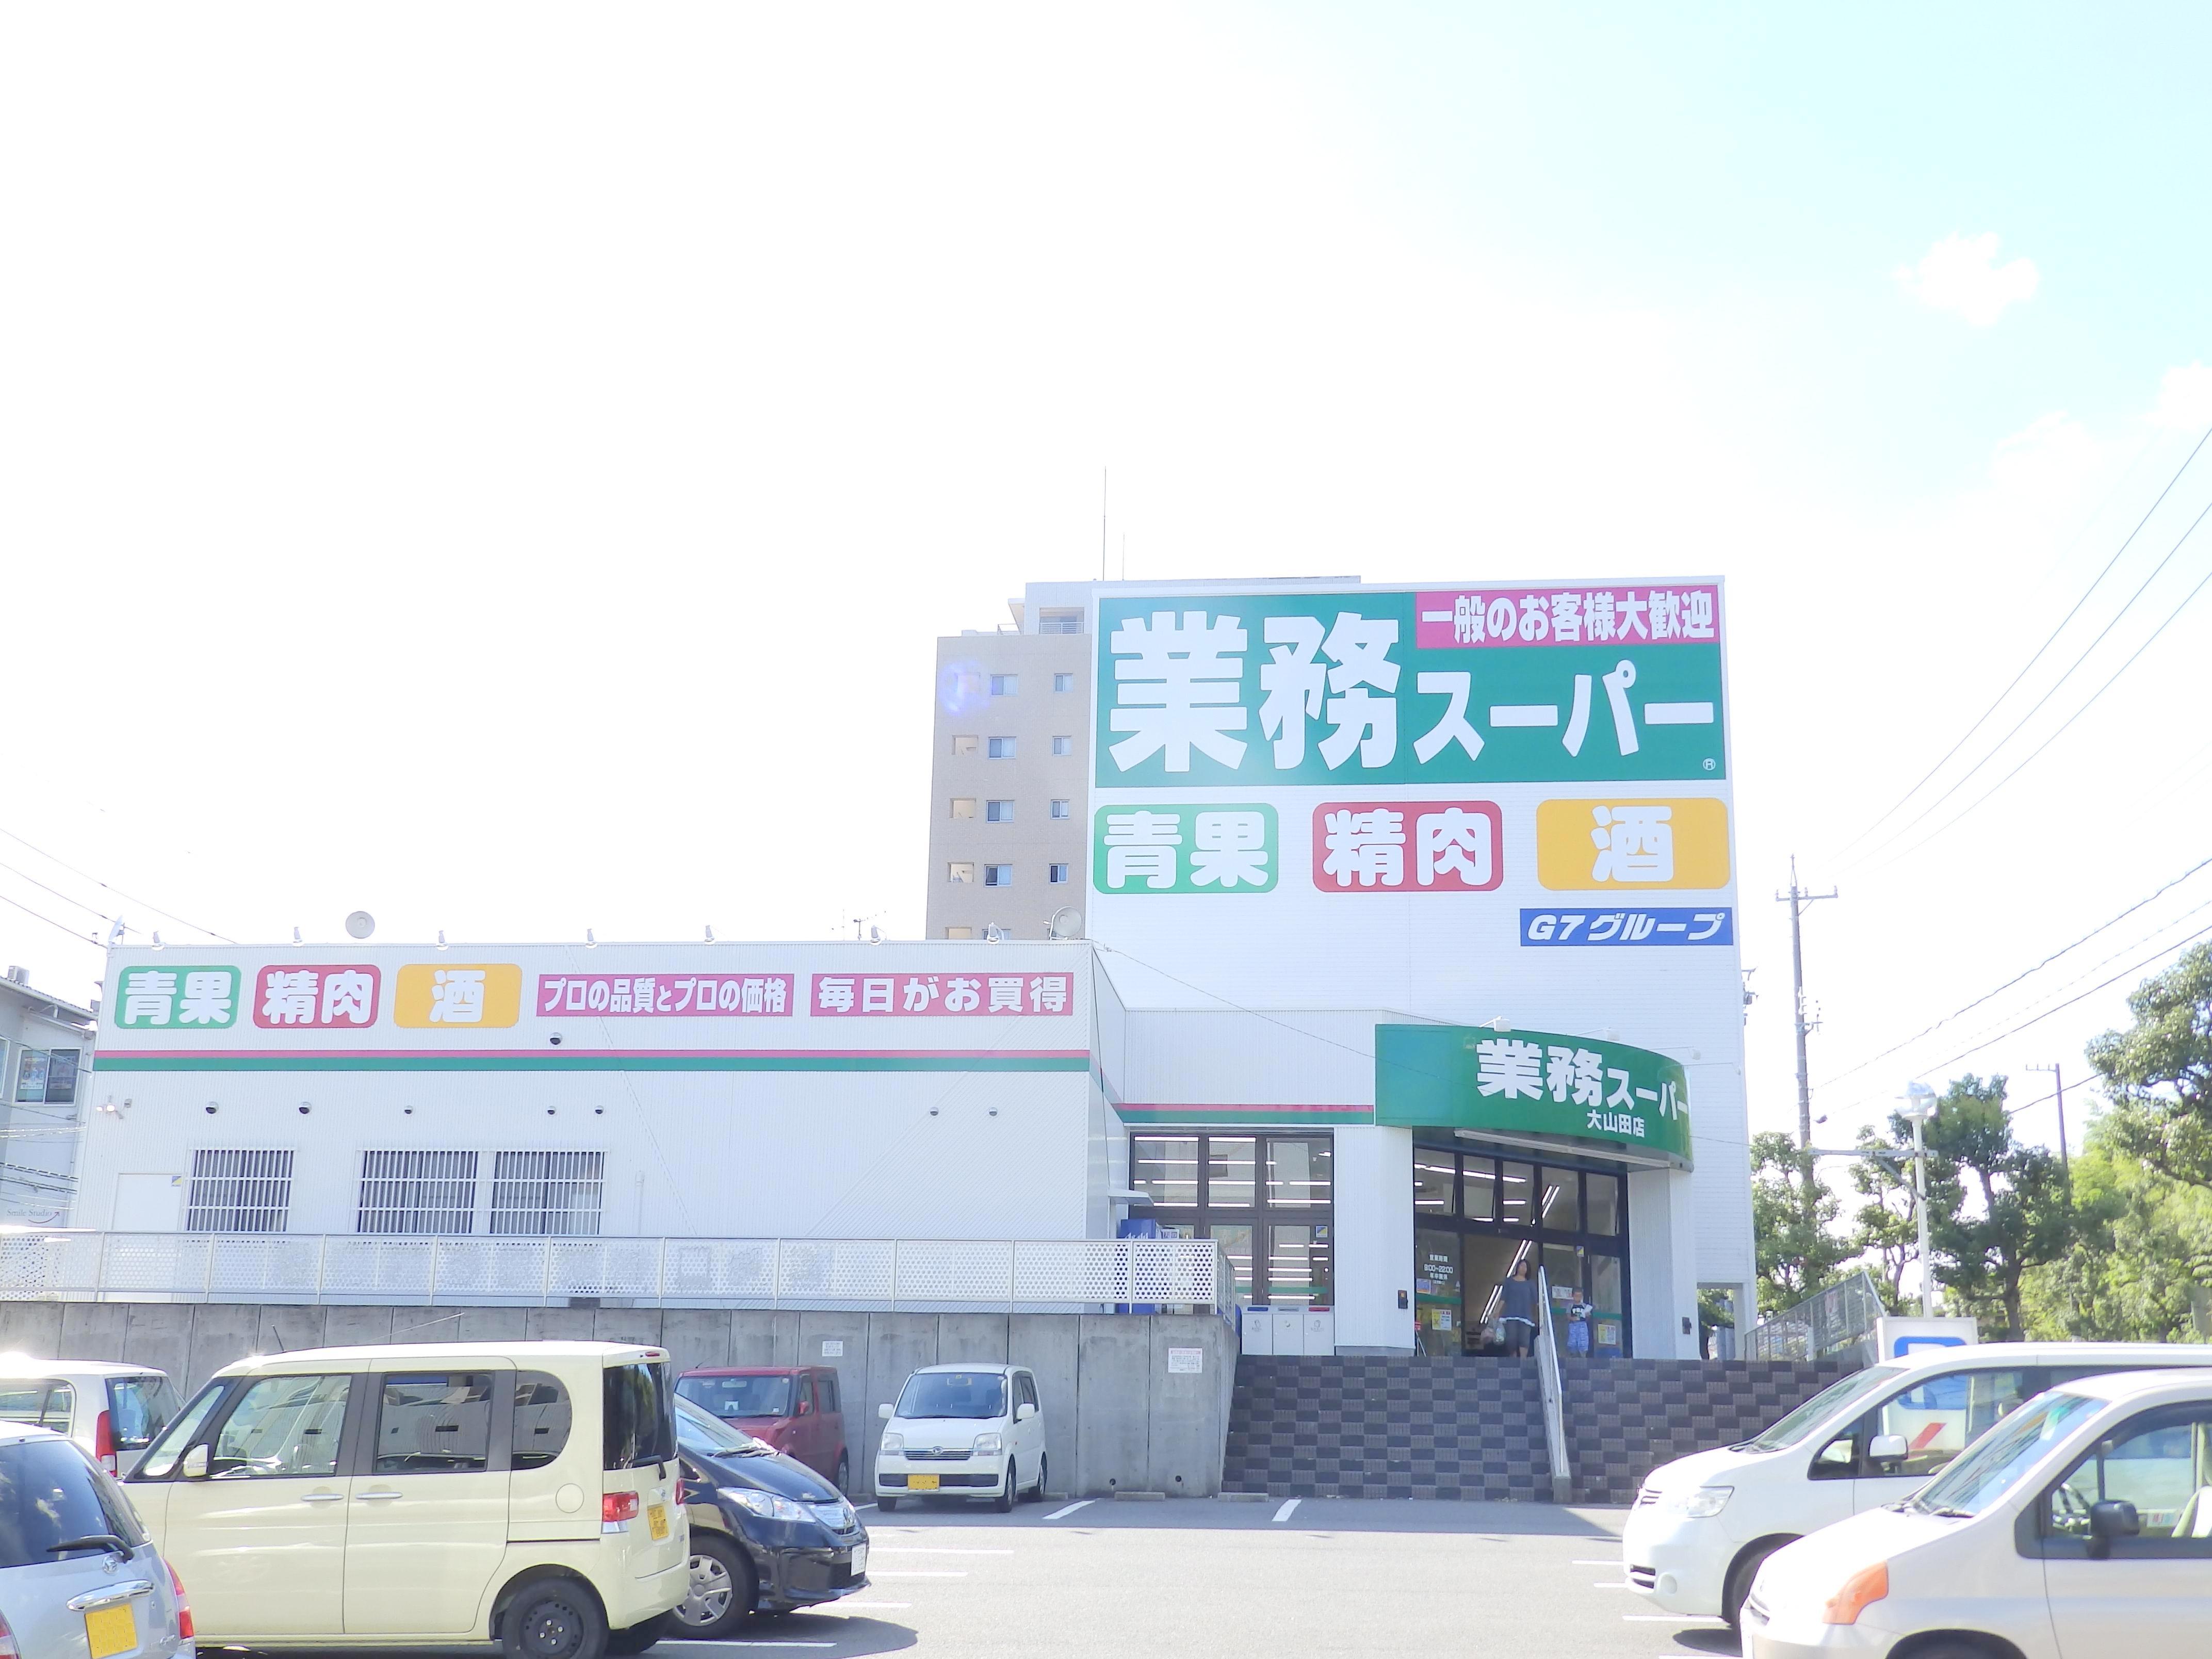 Supermarket. 1484m to business super Oyamada store (Super)